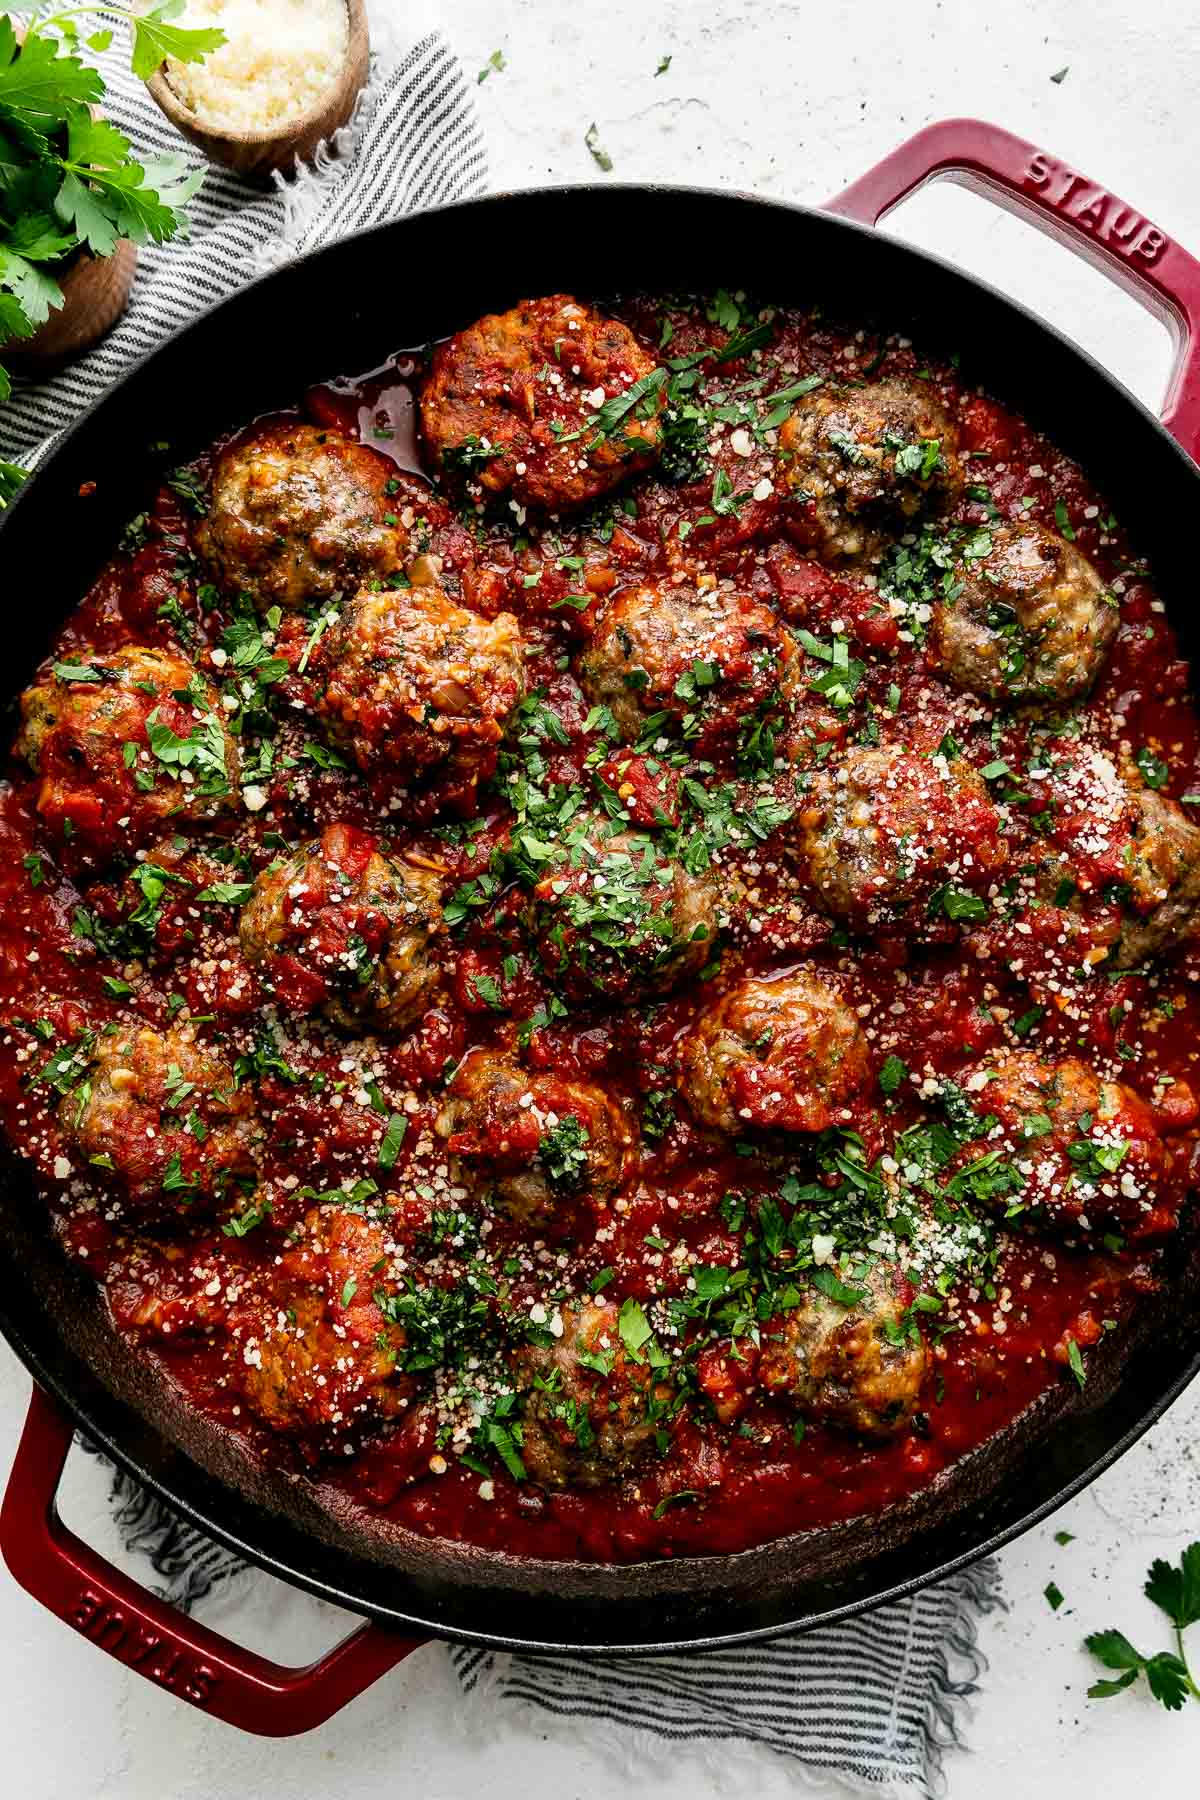 Best-Ever Meatballs Italian Ricotta Meatballs with Simple Tomato Sauce pic